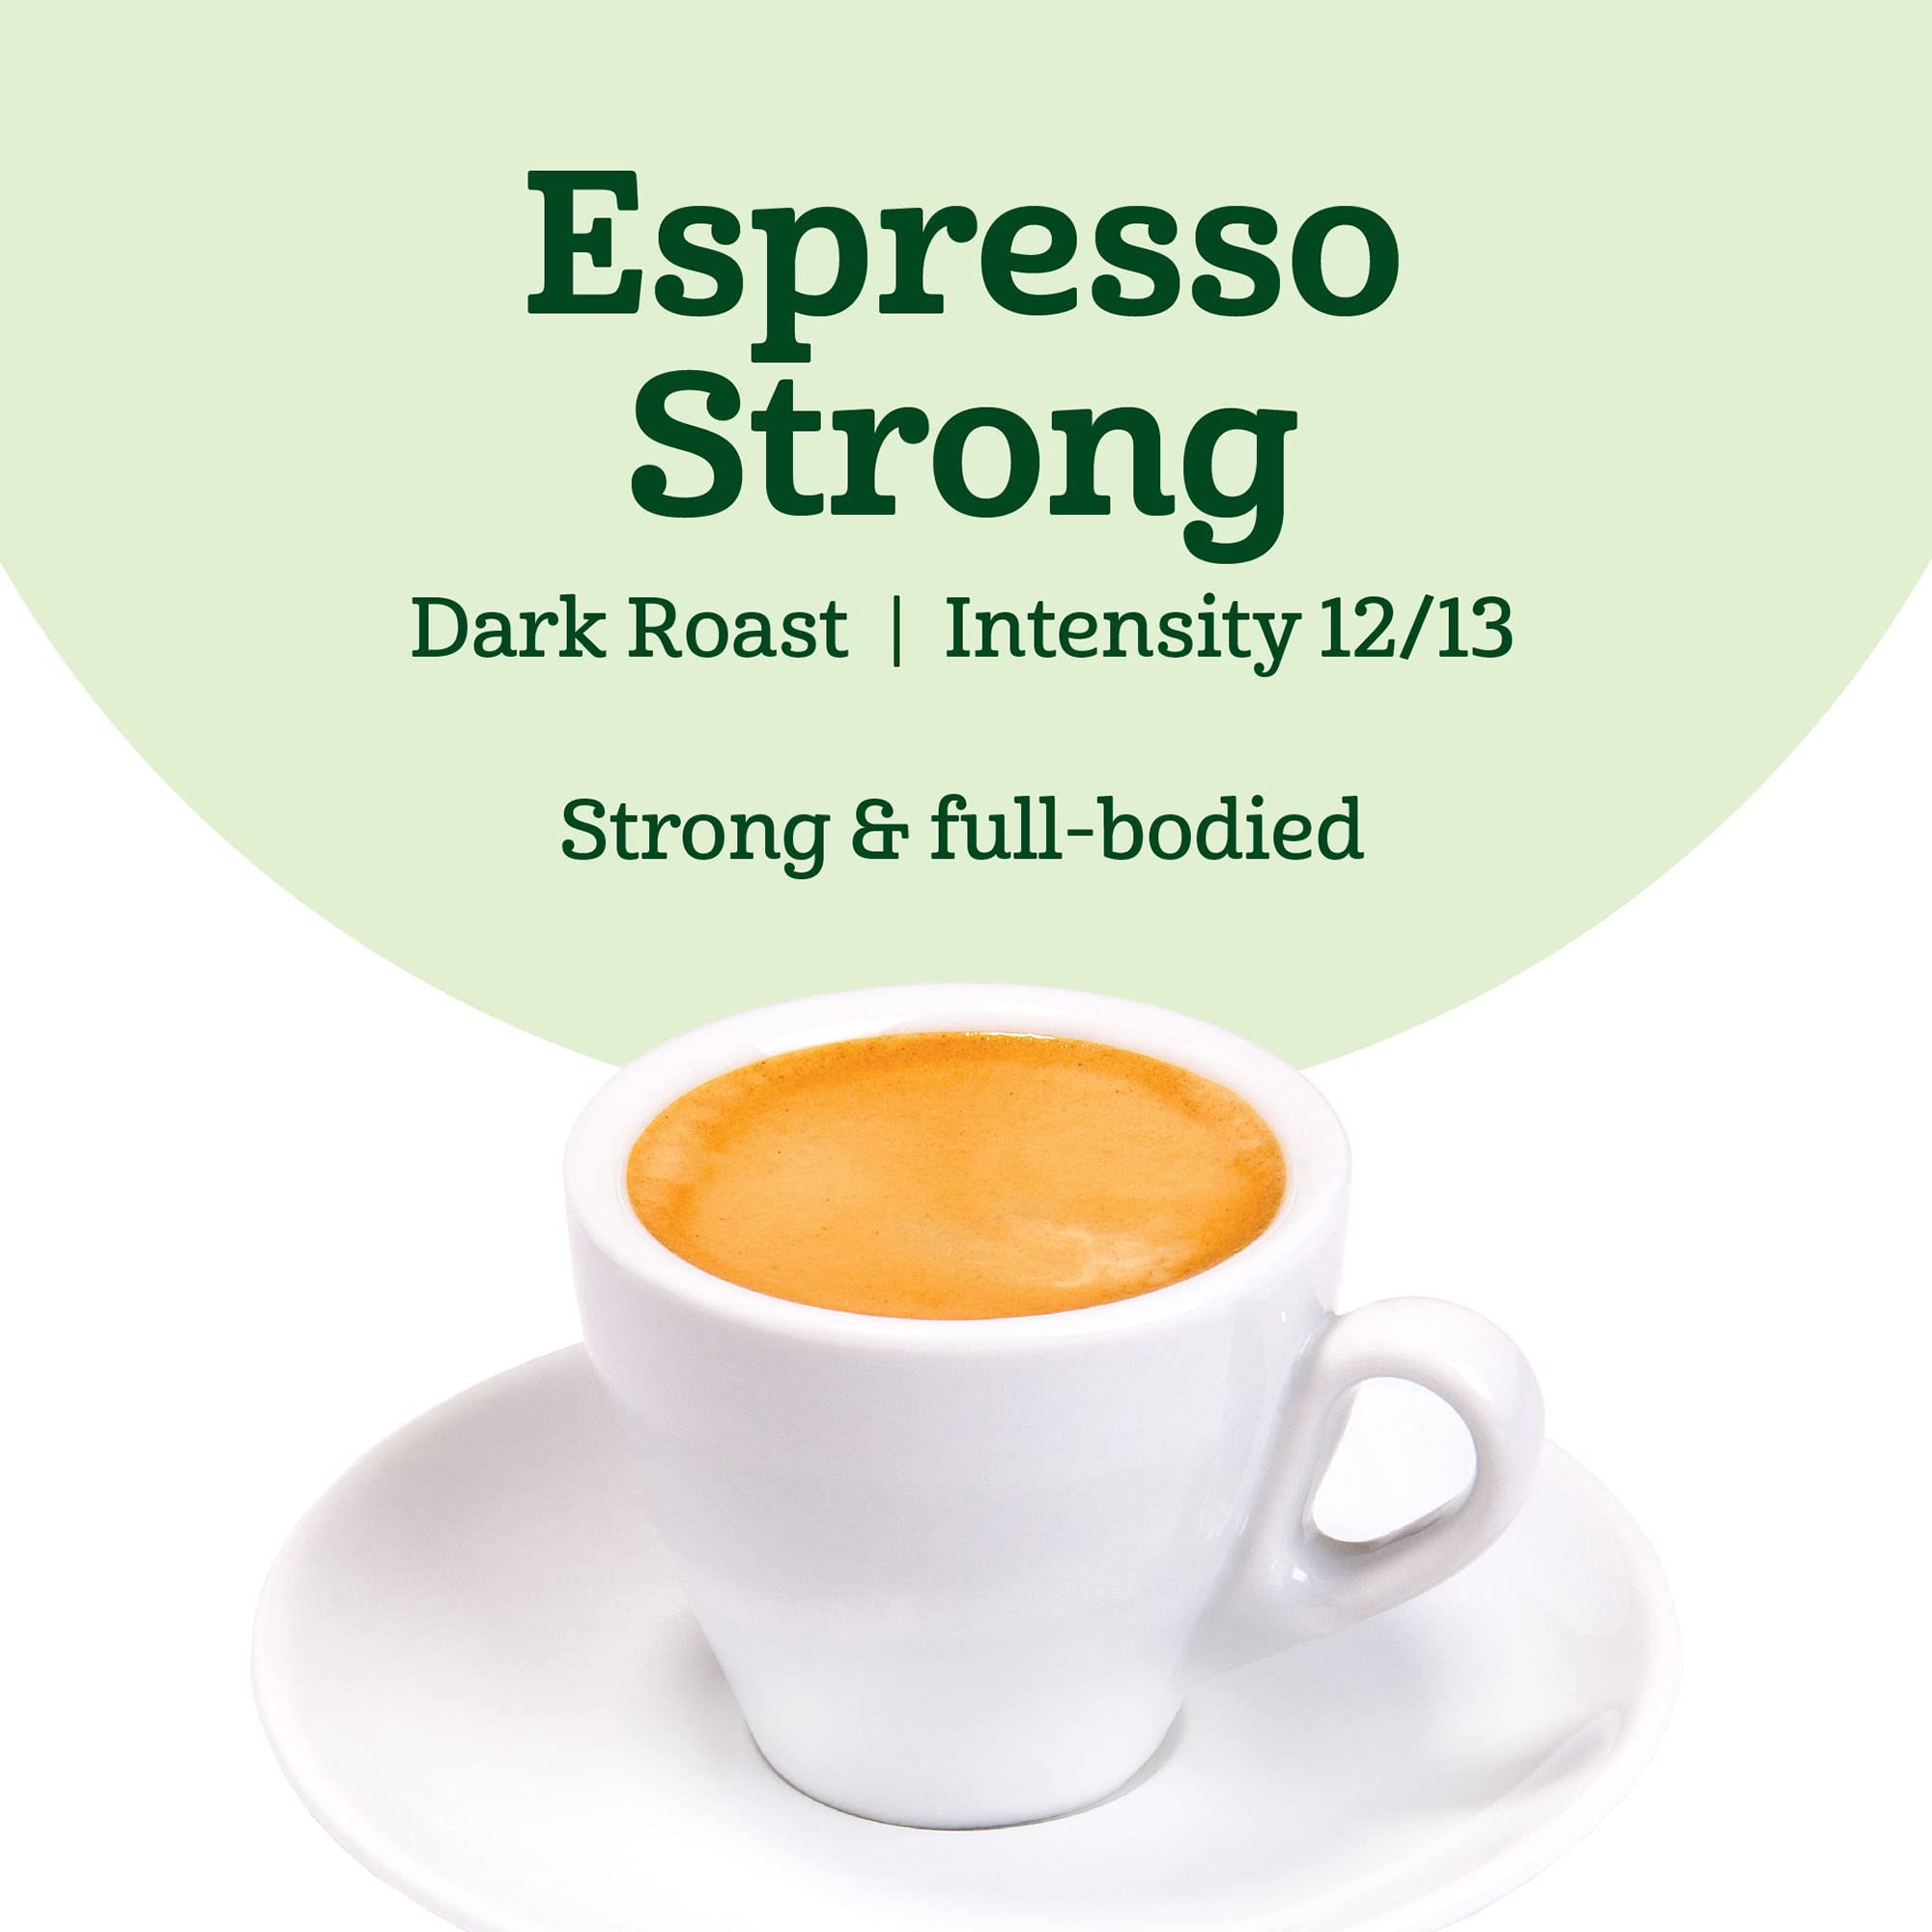 Amazon Fresh Espresso Strong Dark Roast Aluminum Capsules, Compatible with Nespresso Original Brewers, Intensity 12/13, 50 Count (5 Packs of 10)